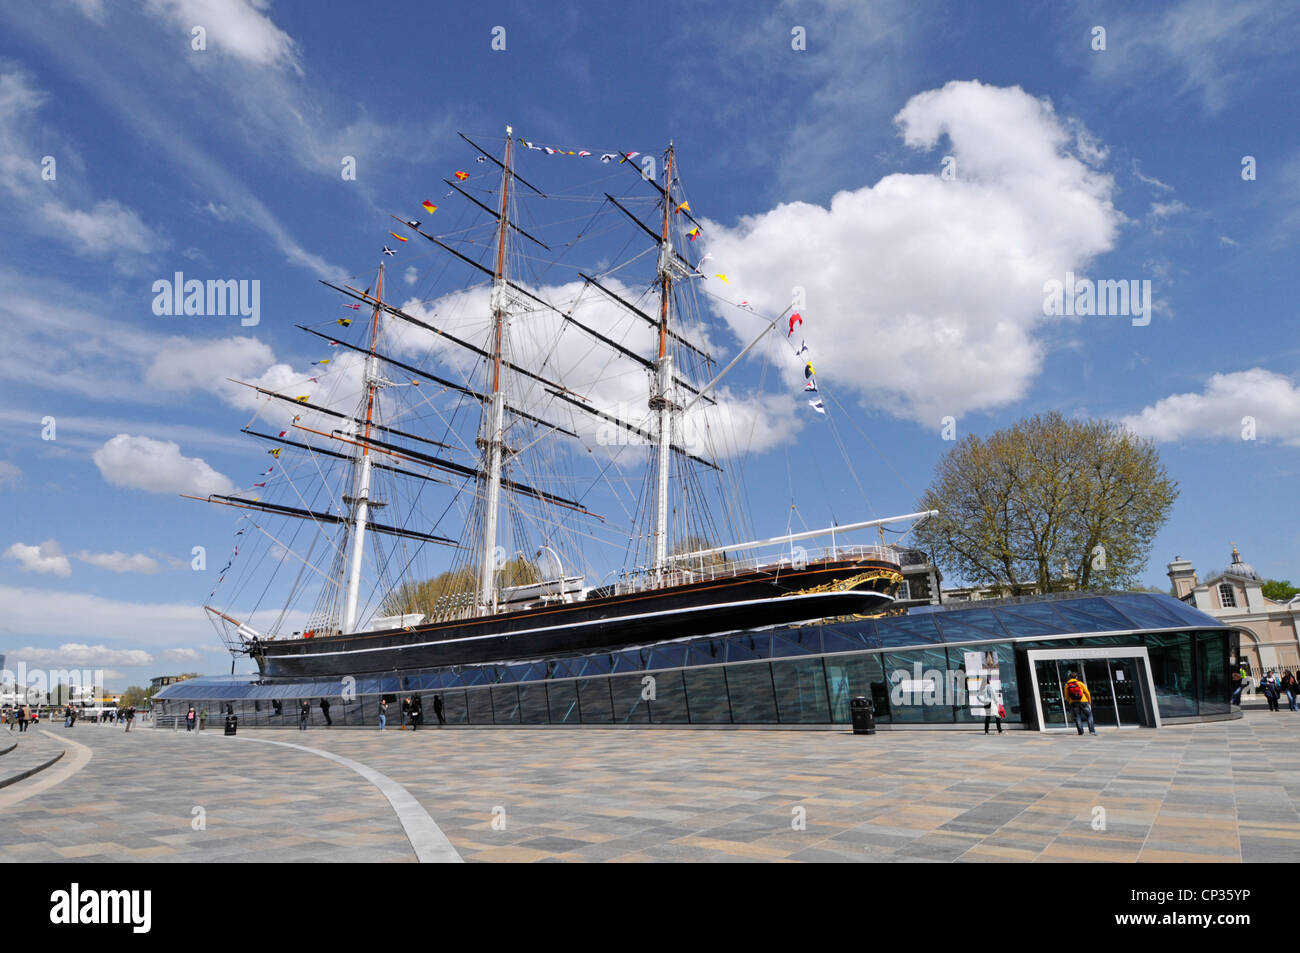 Victorian Historical Restored Cutty Sark British Tea Clipper Ship Part Of National Historic